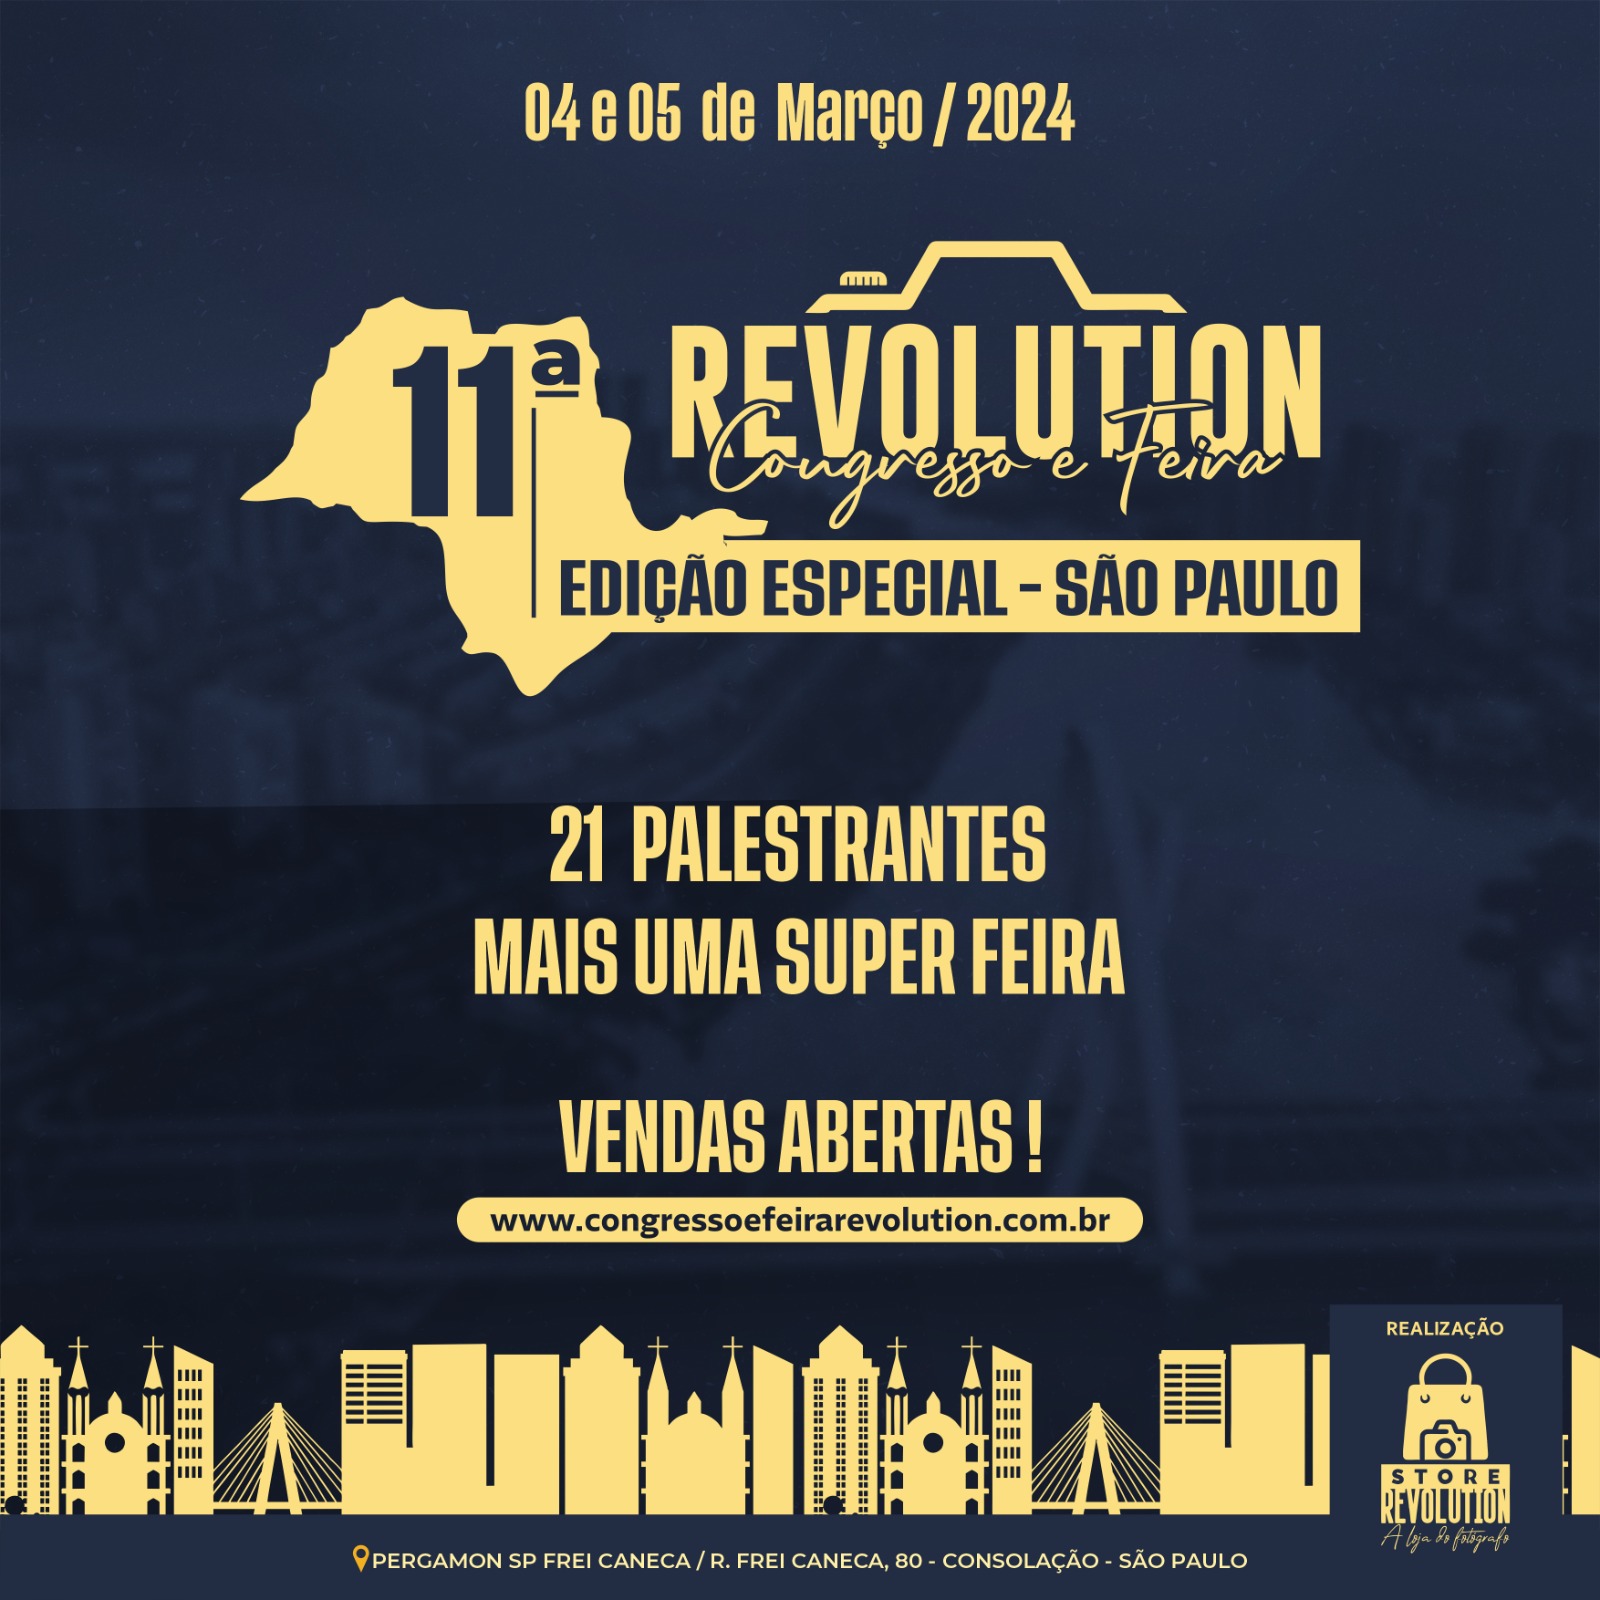 UPCYTOUR INDUSTRIAL NA SEMANA FASHION REVOLUTION em São Paulo - Sympla